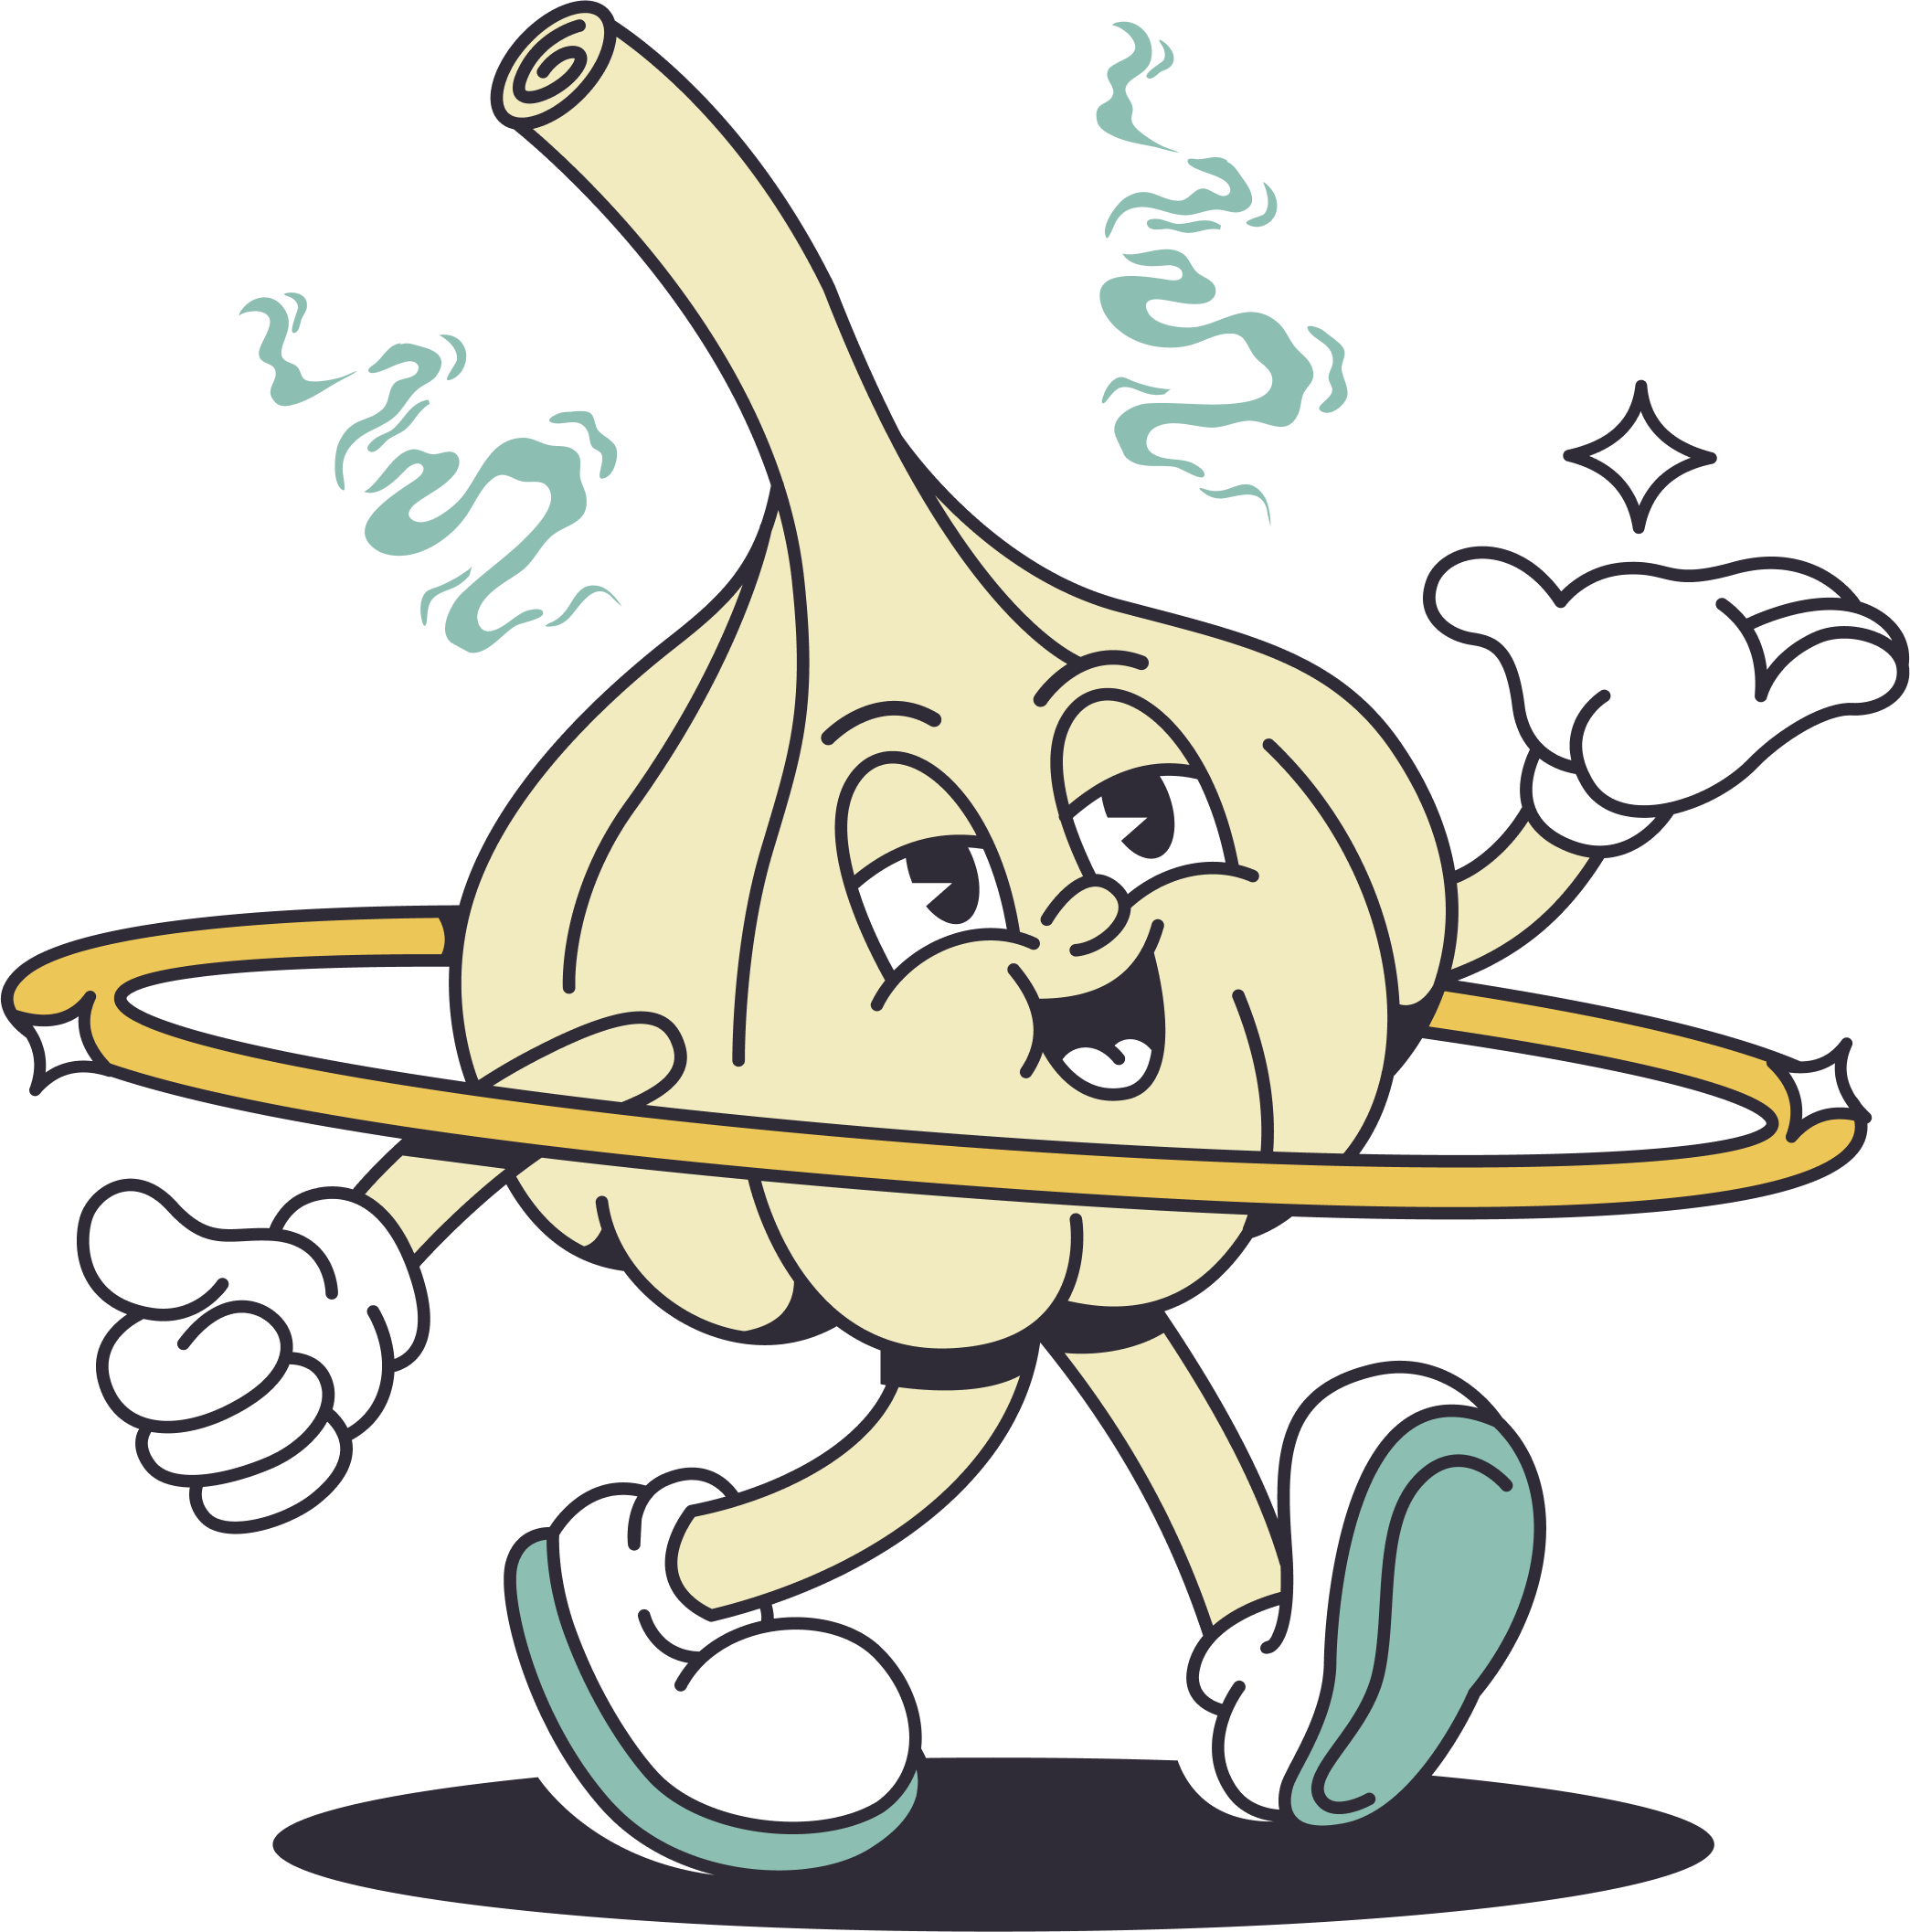 Cartoon garlic bulb character giving a thumbs up